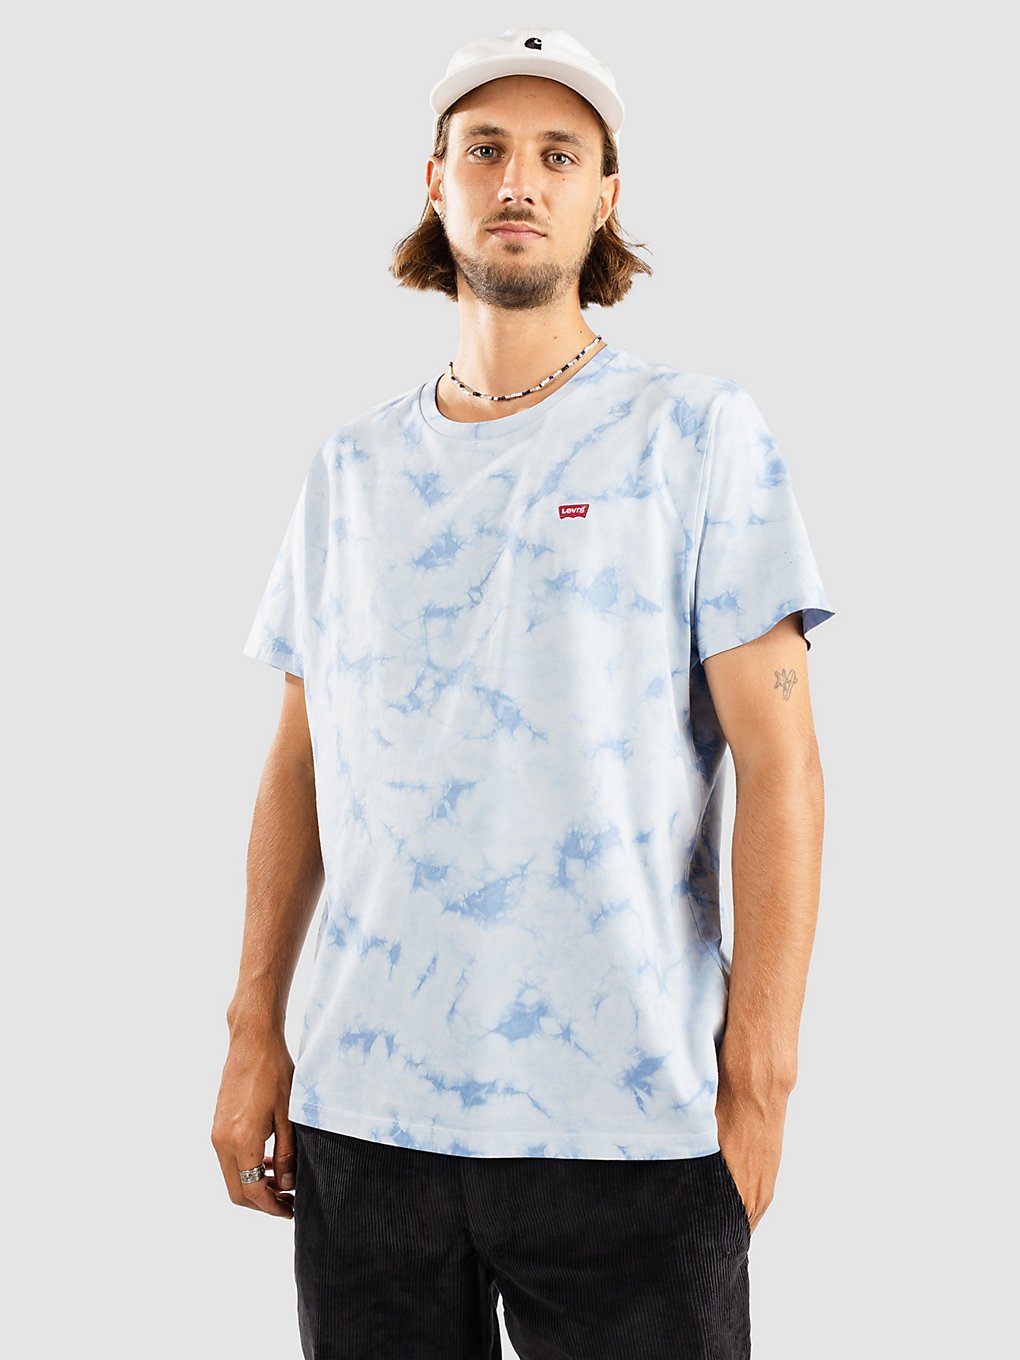 Levi's Original Hm T-Shirt crater lake arctic ice kaufen